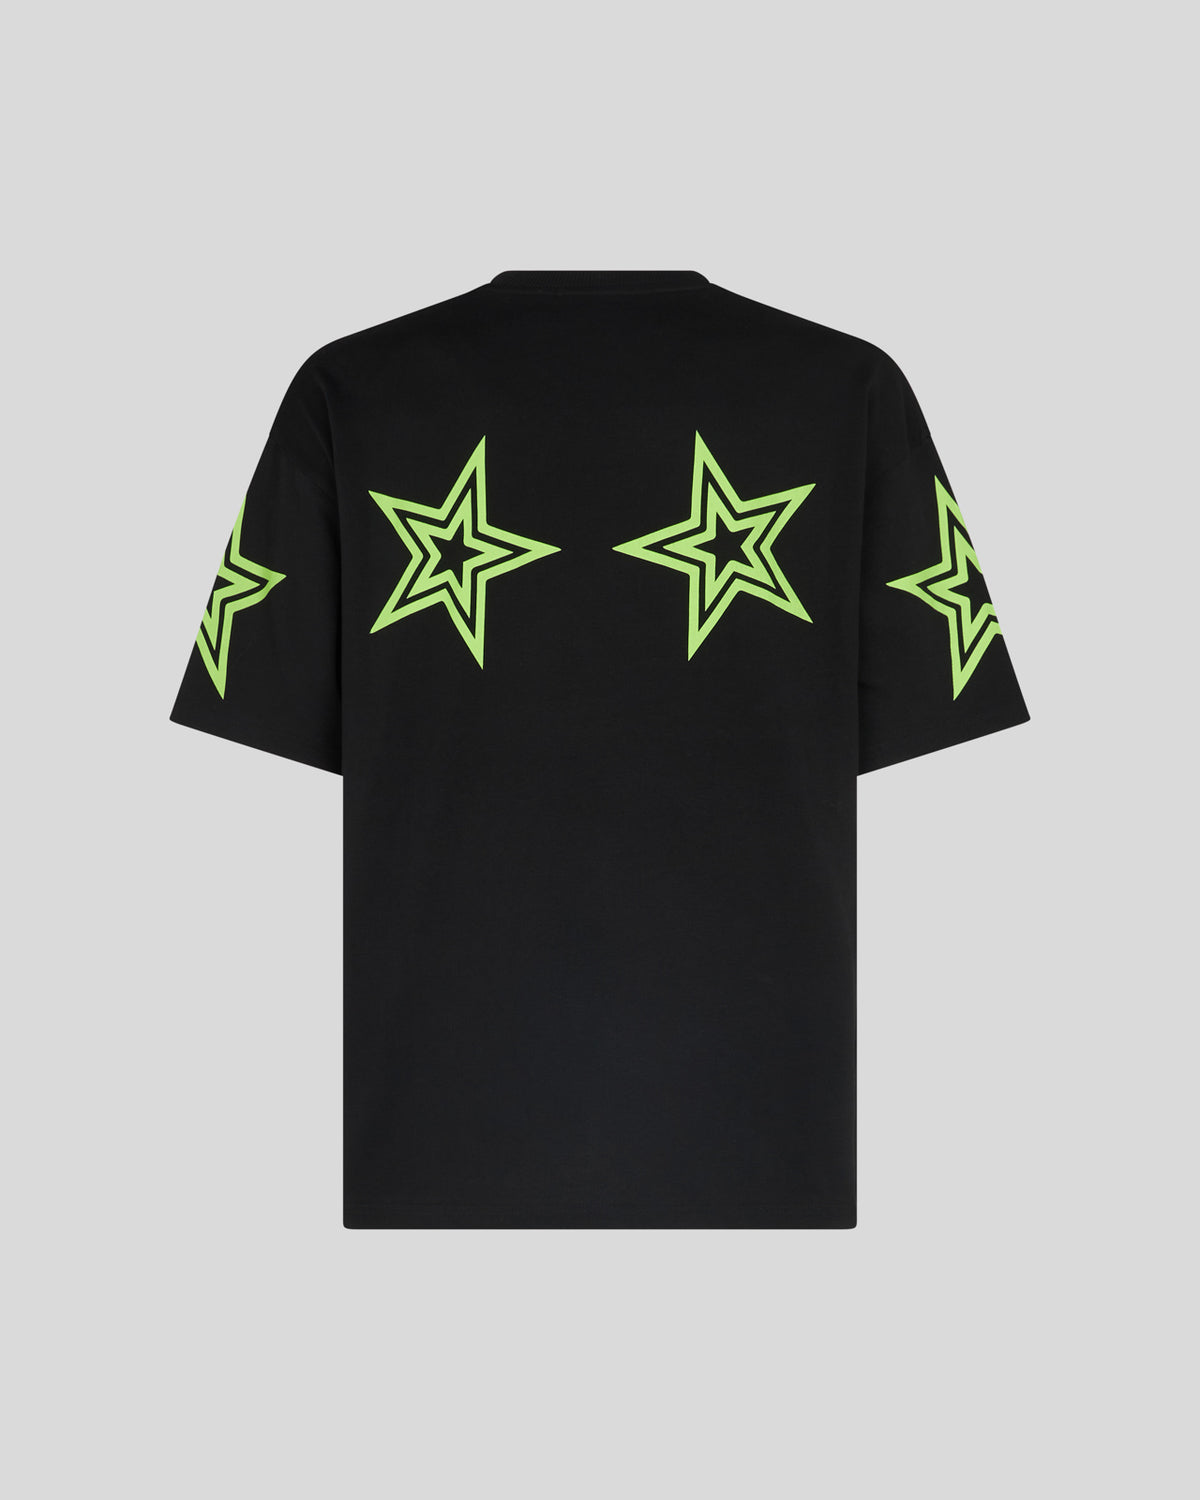 PHOBIA BLACK T-SHIRT WITH GREEN STARS PRINT